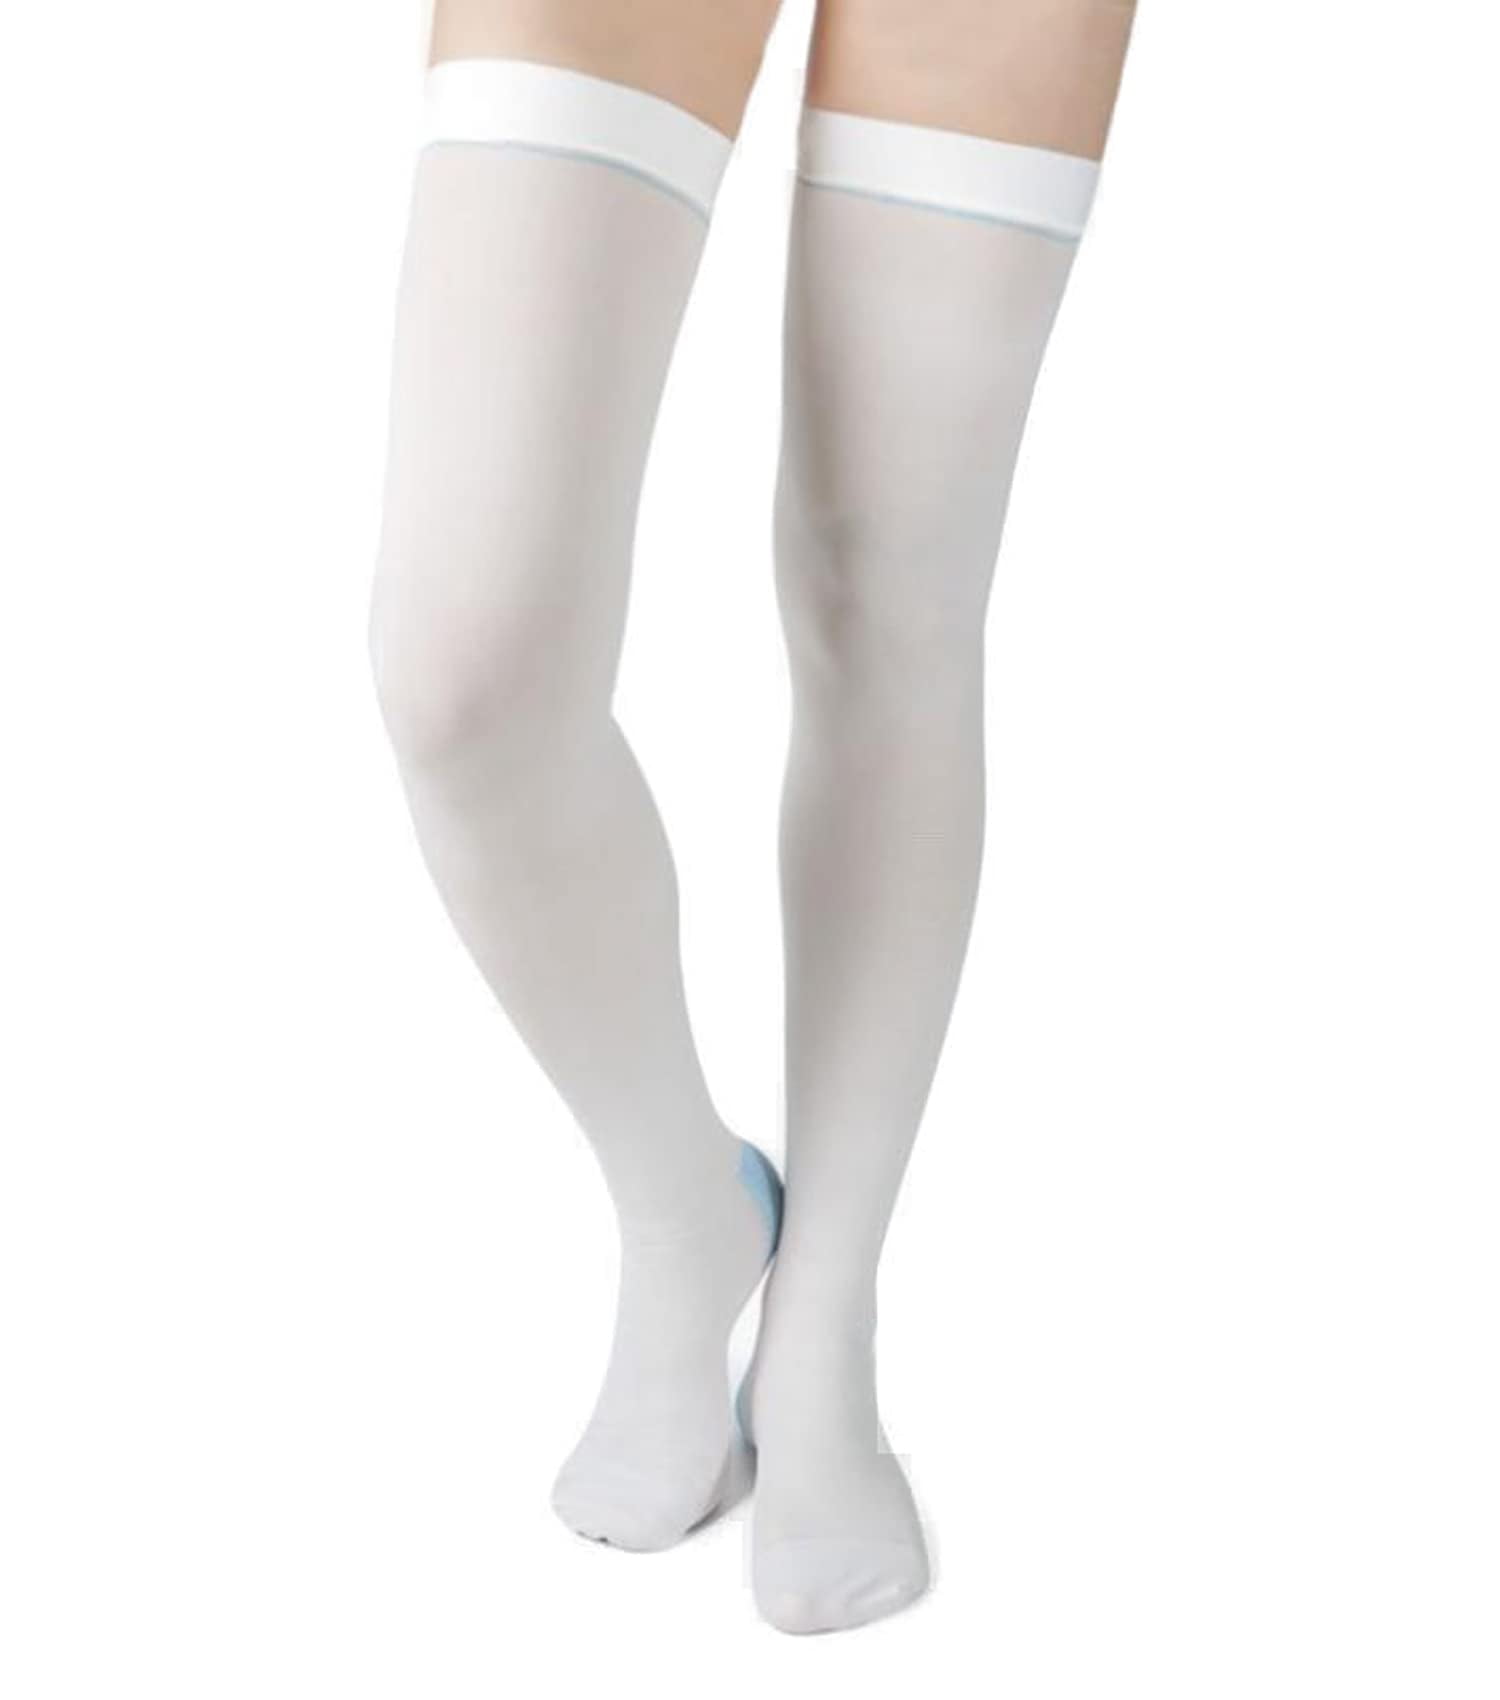 Buy T.E.D.™ Anti-Embolism Stockings, Knee Length, Medium Regular